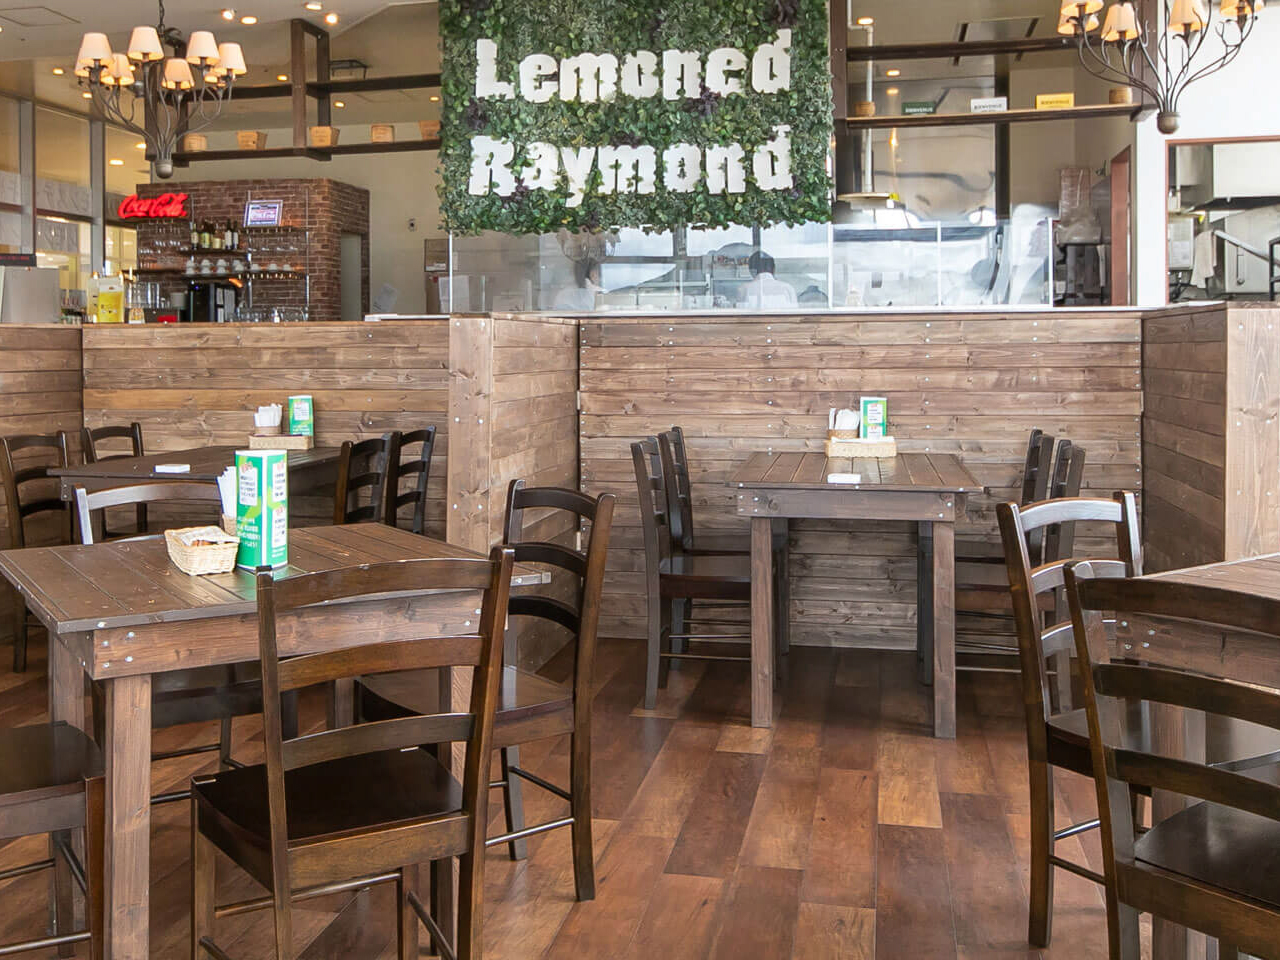 Lemoned Raymond